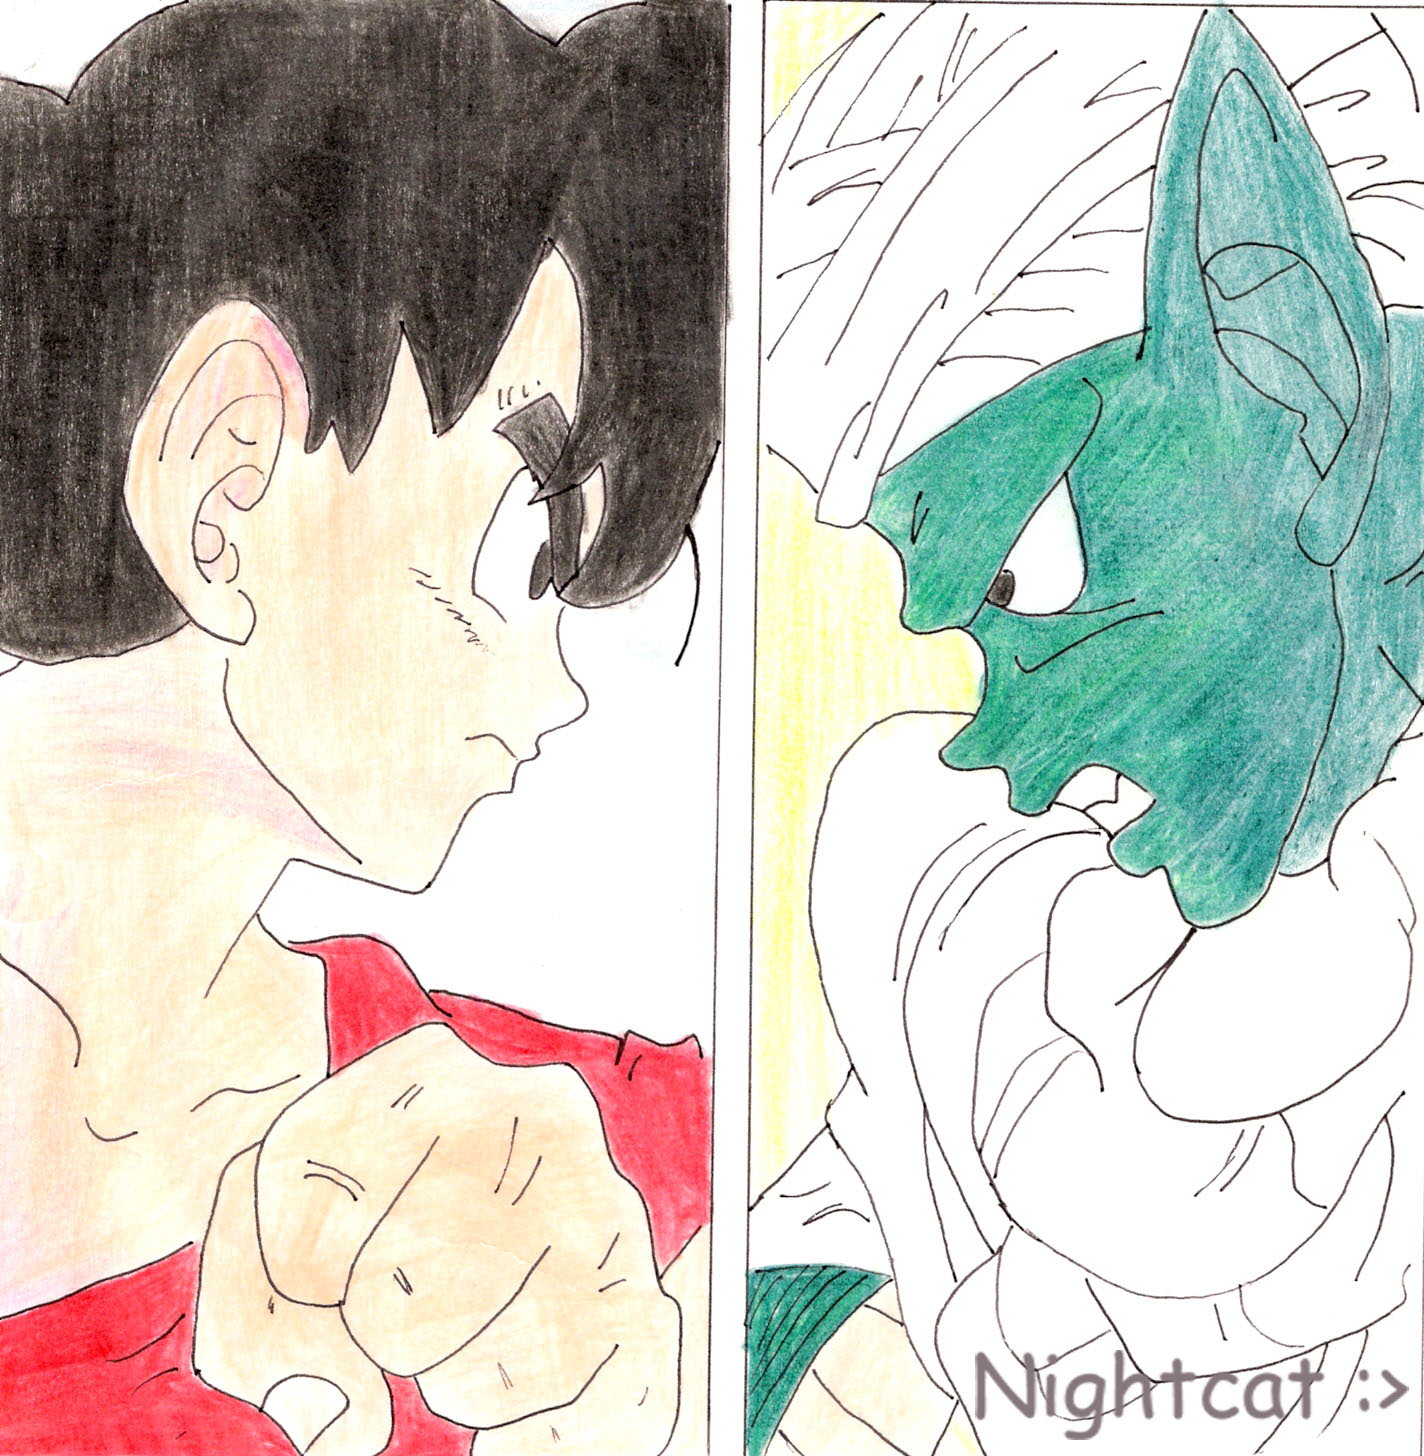 Goku and piccolo by Nightcathybrid